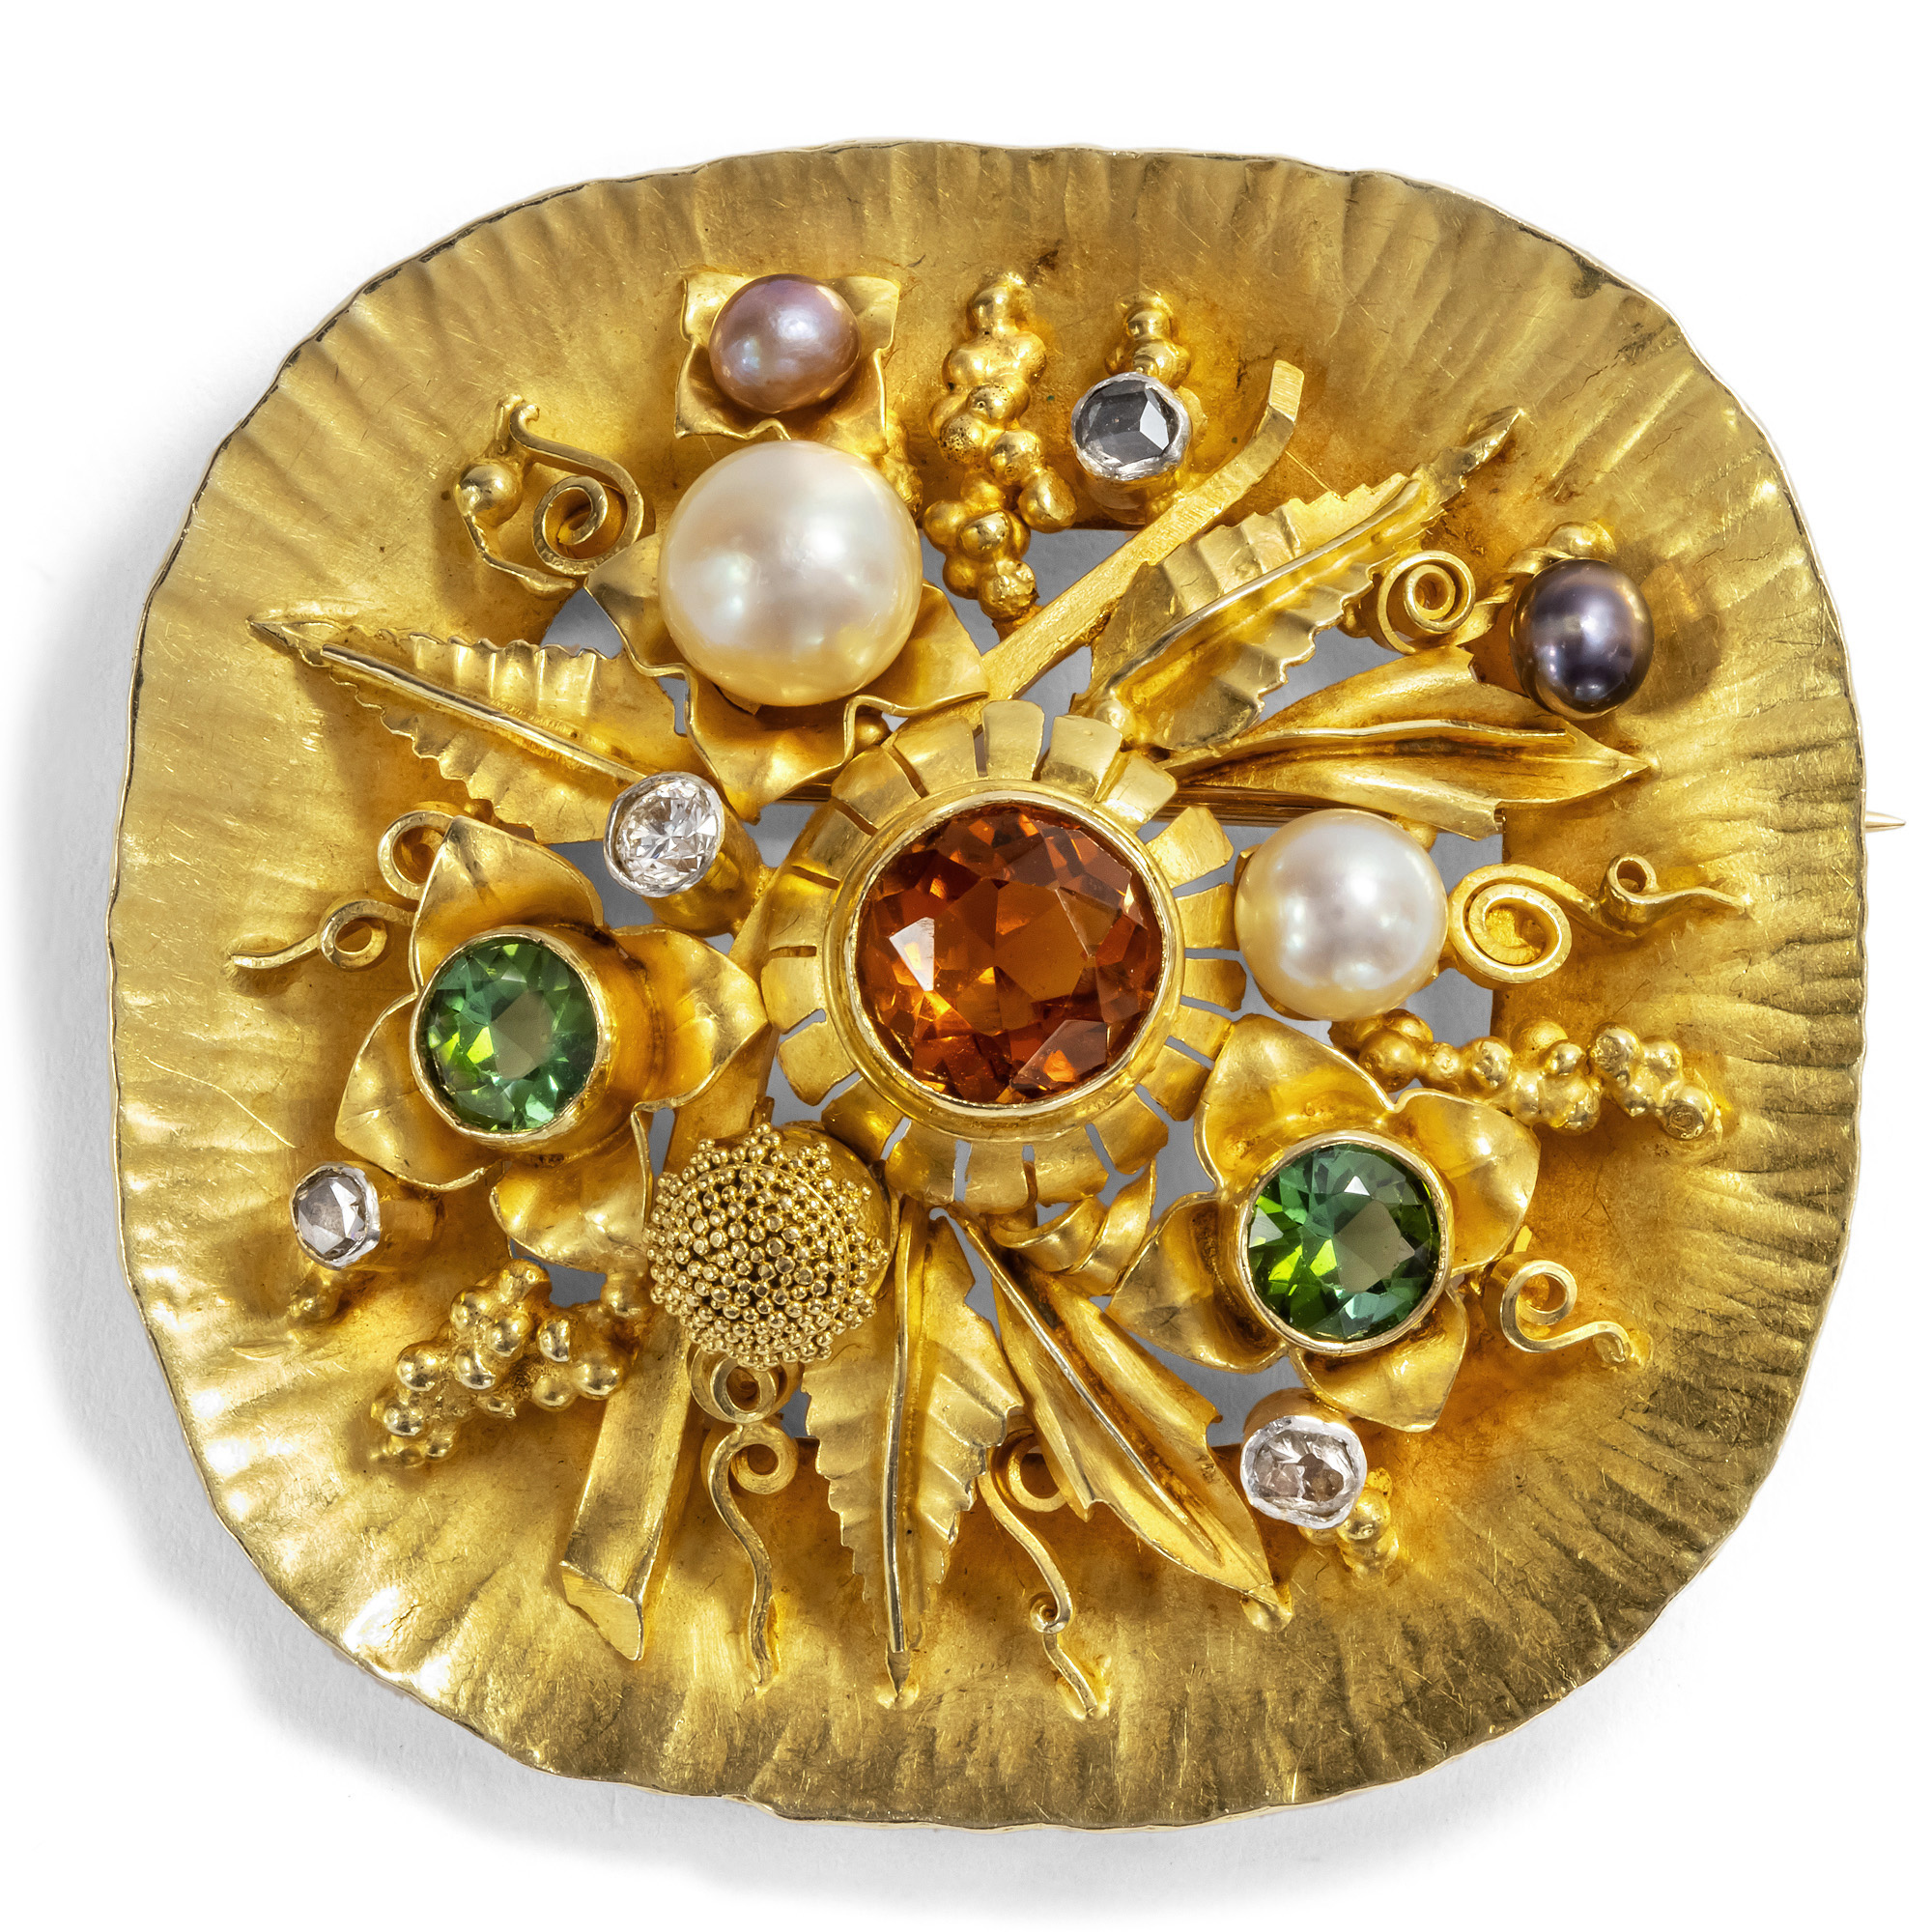 Exquisite Brooch with Gemstones & Pearls by Johann Michael Wilm, Munich c. 1950